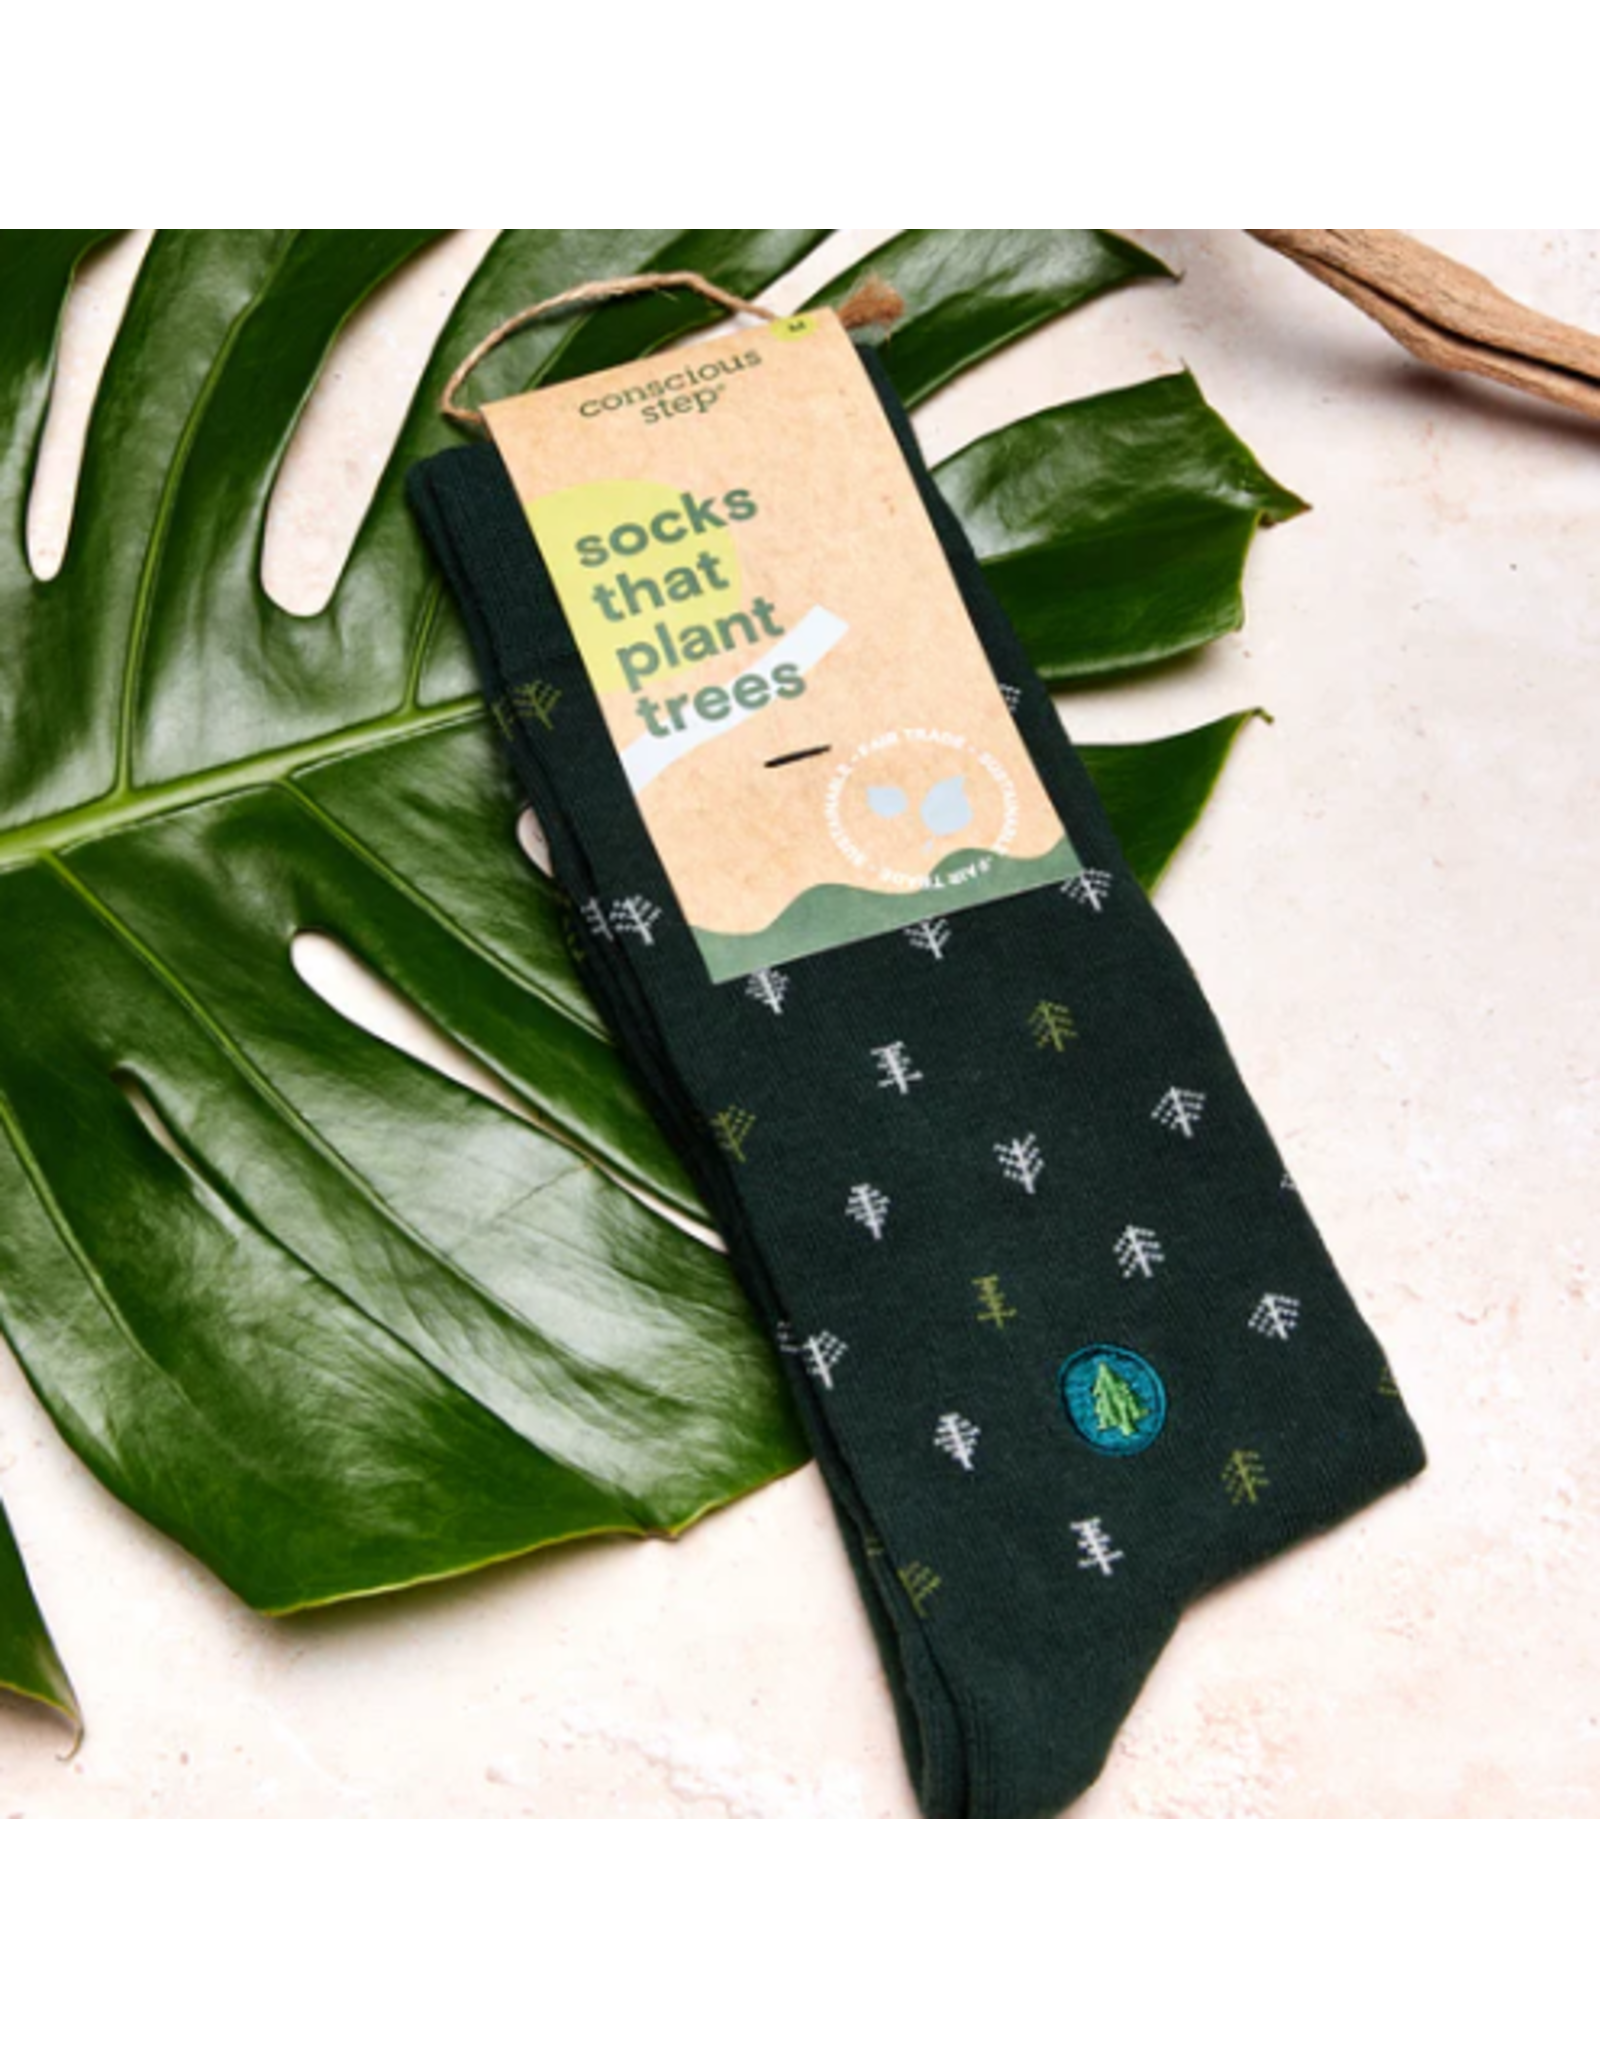 India Crew Socks That Plant Trees - Dark Green